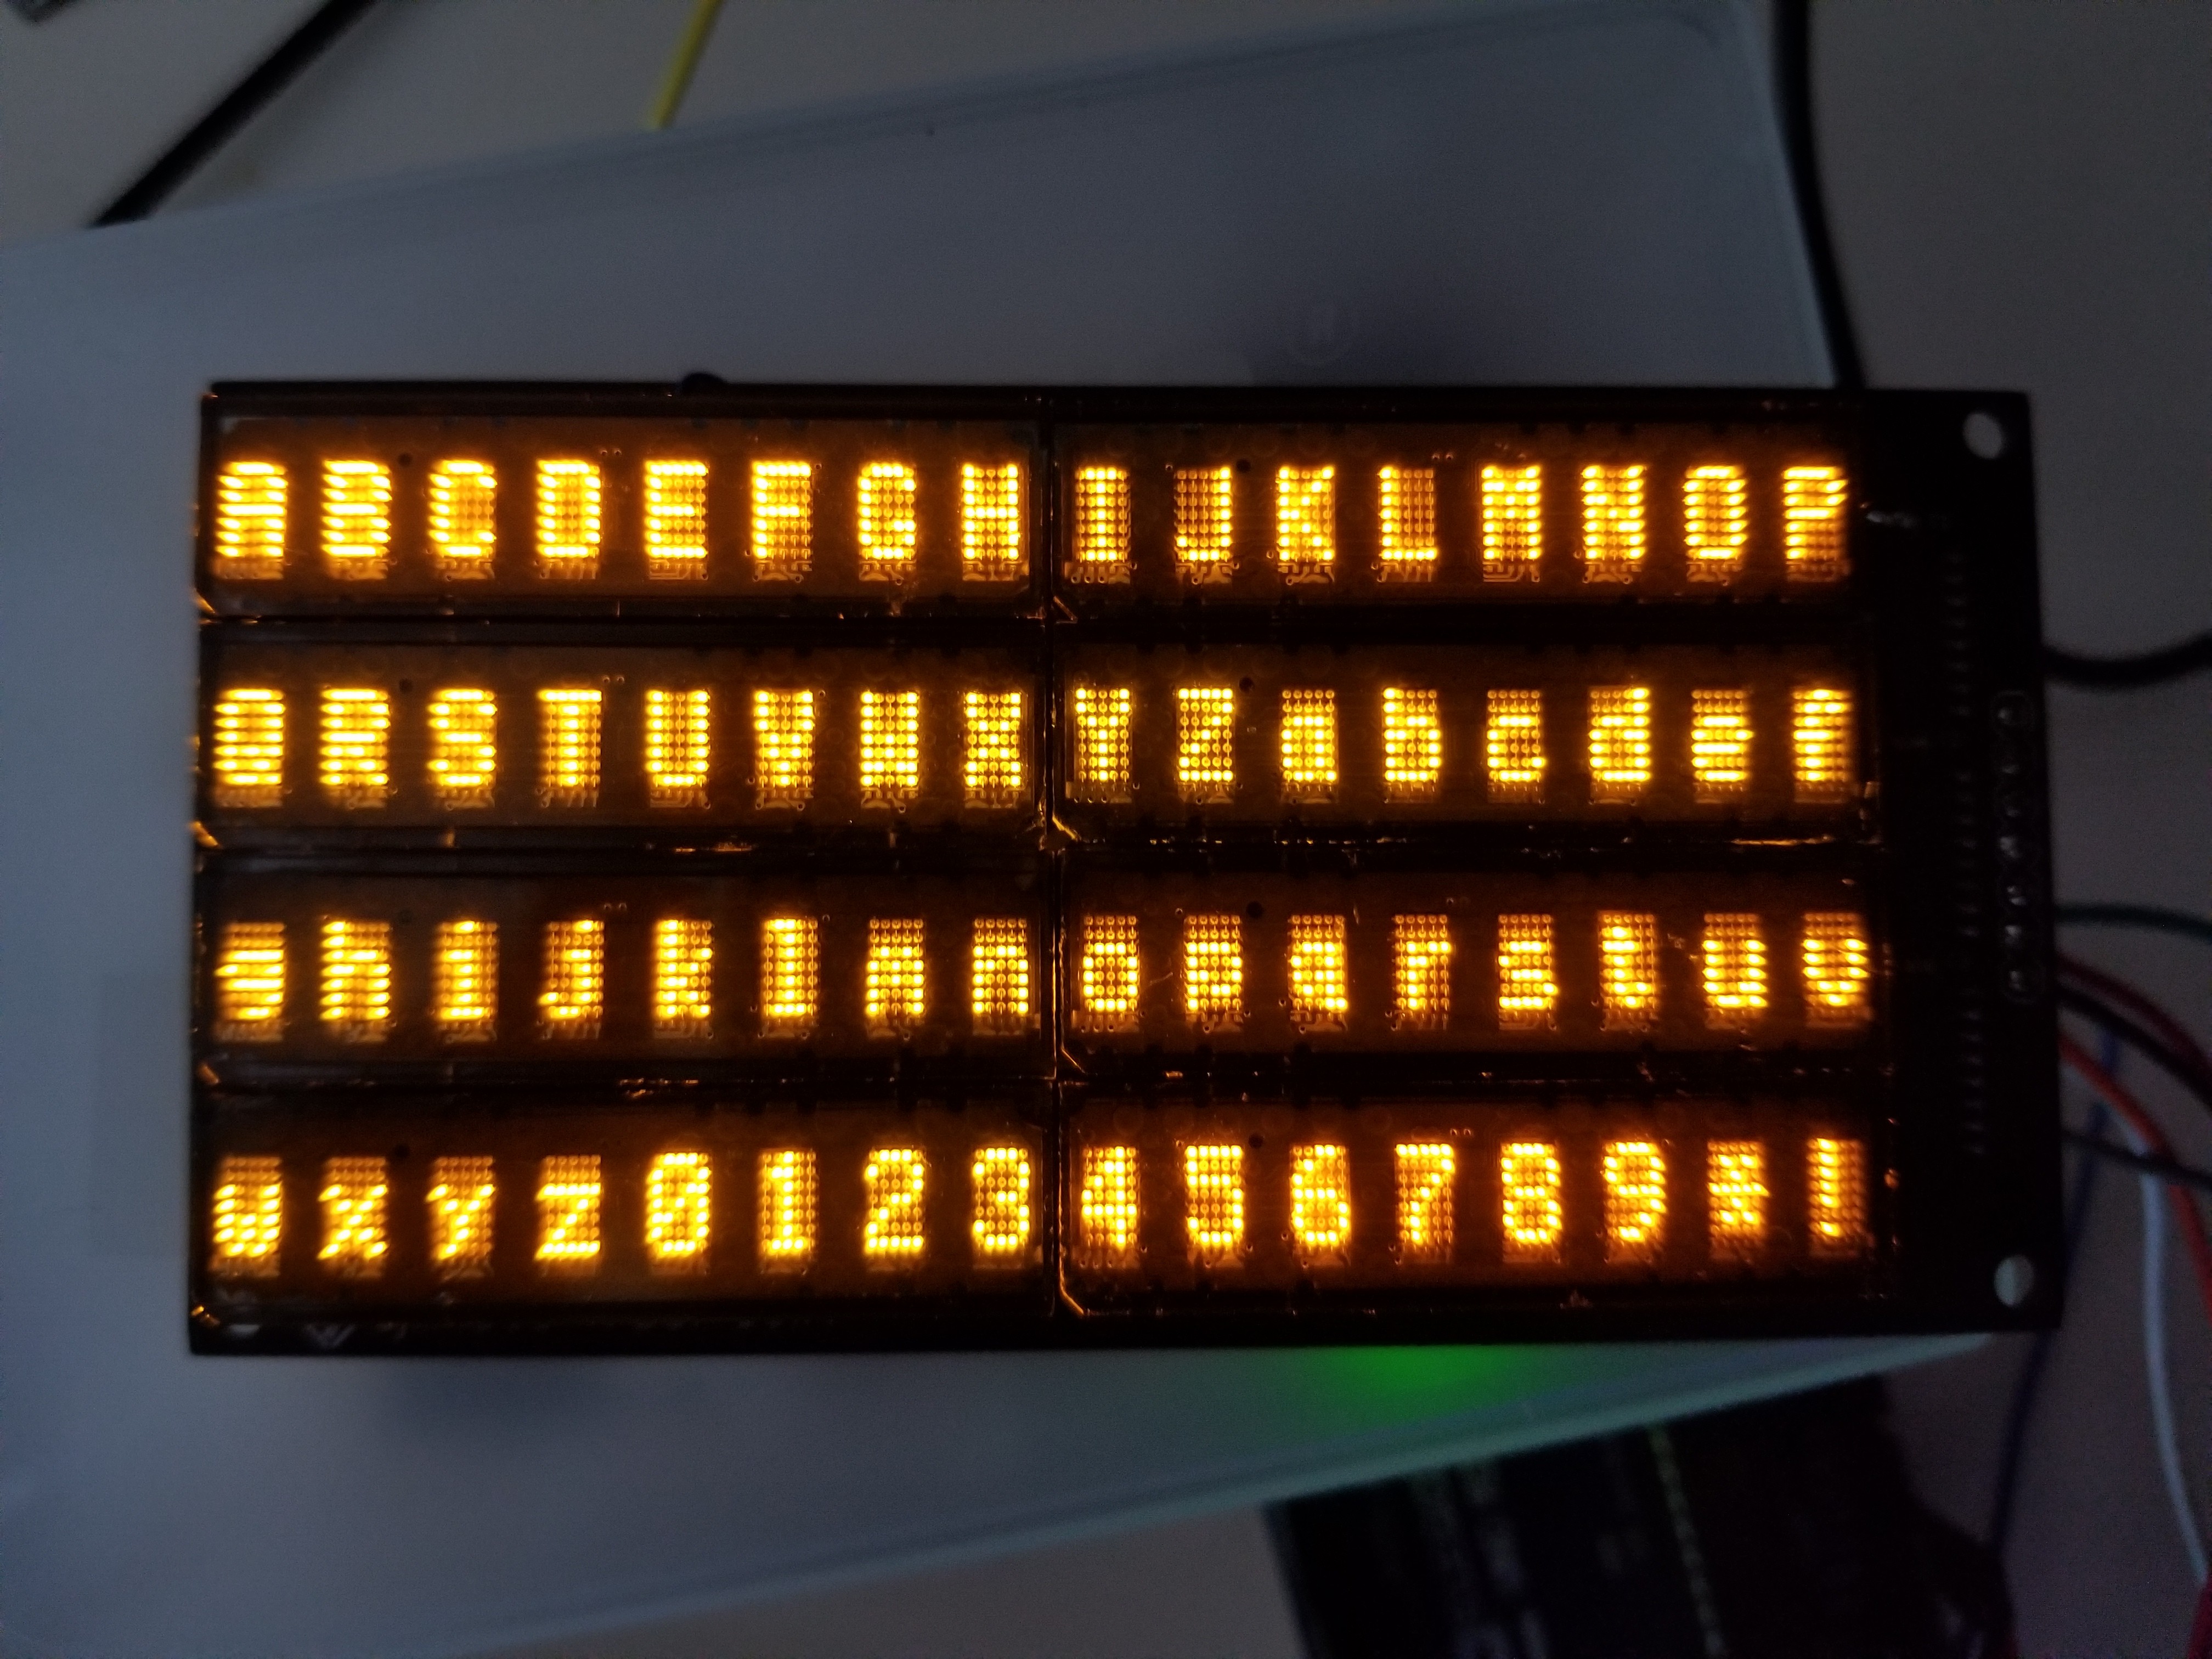 Alphanumeric LED Displays + Libraries | Hackaday.io